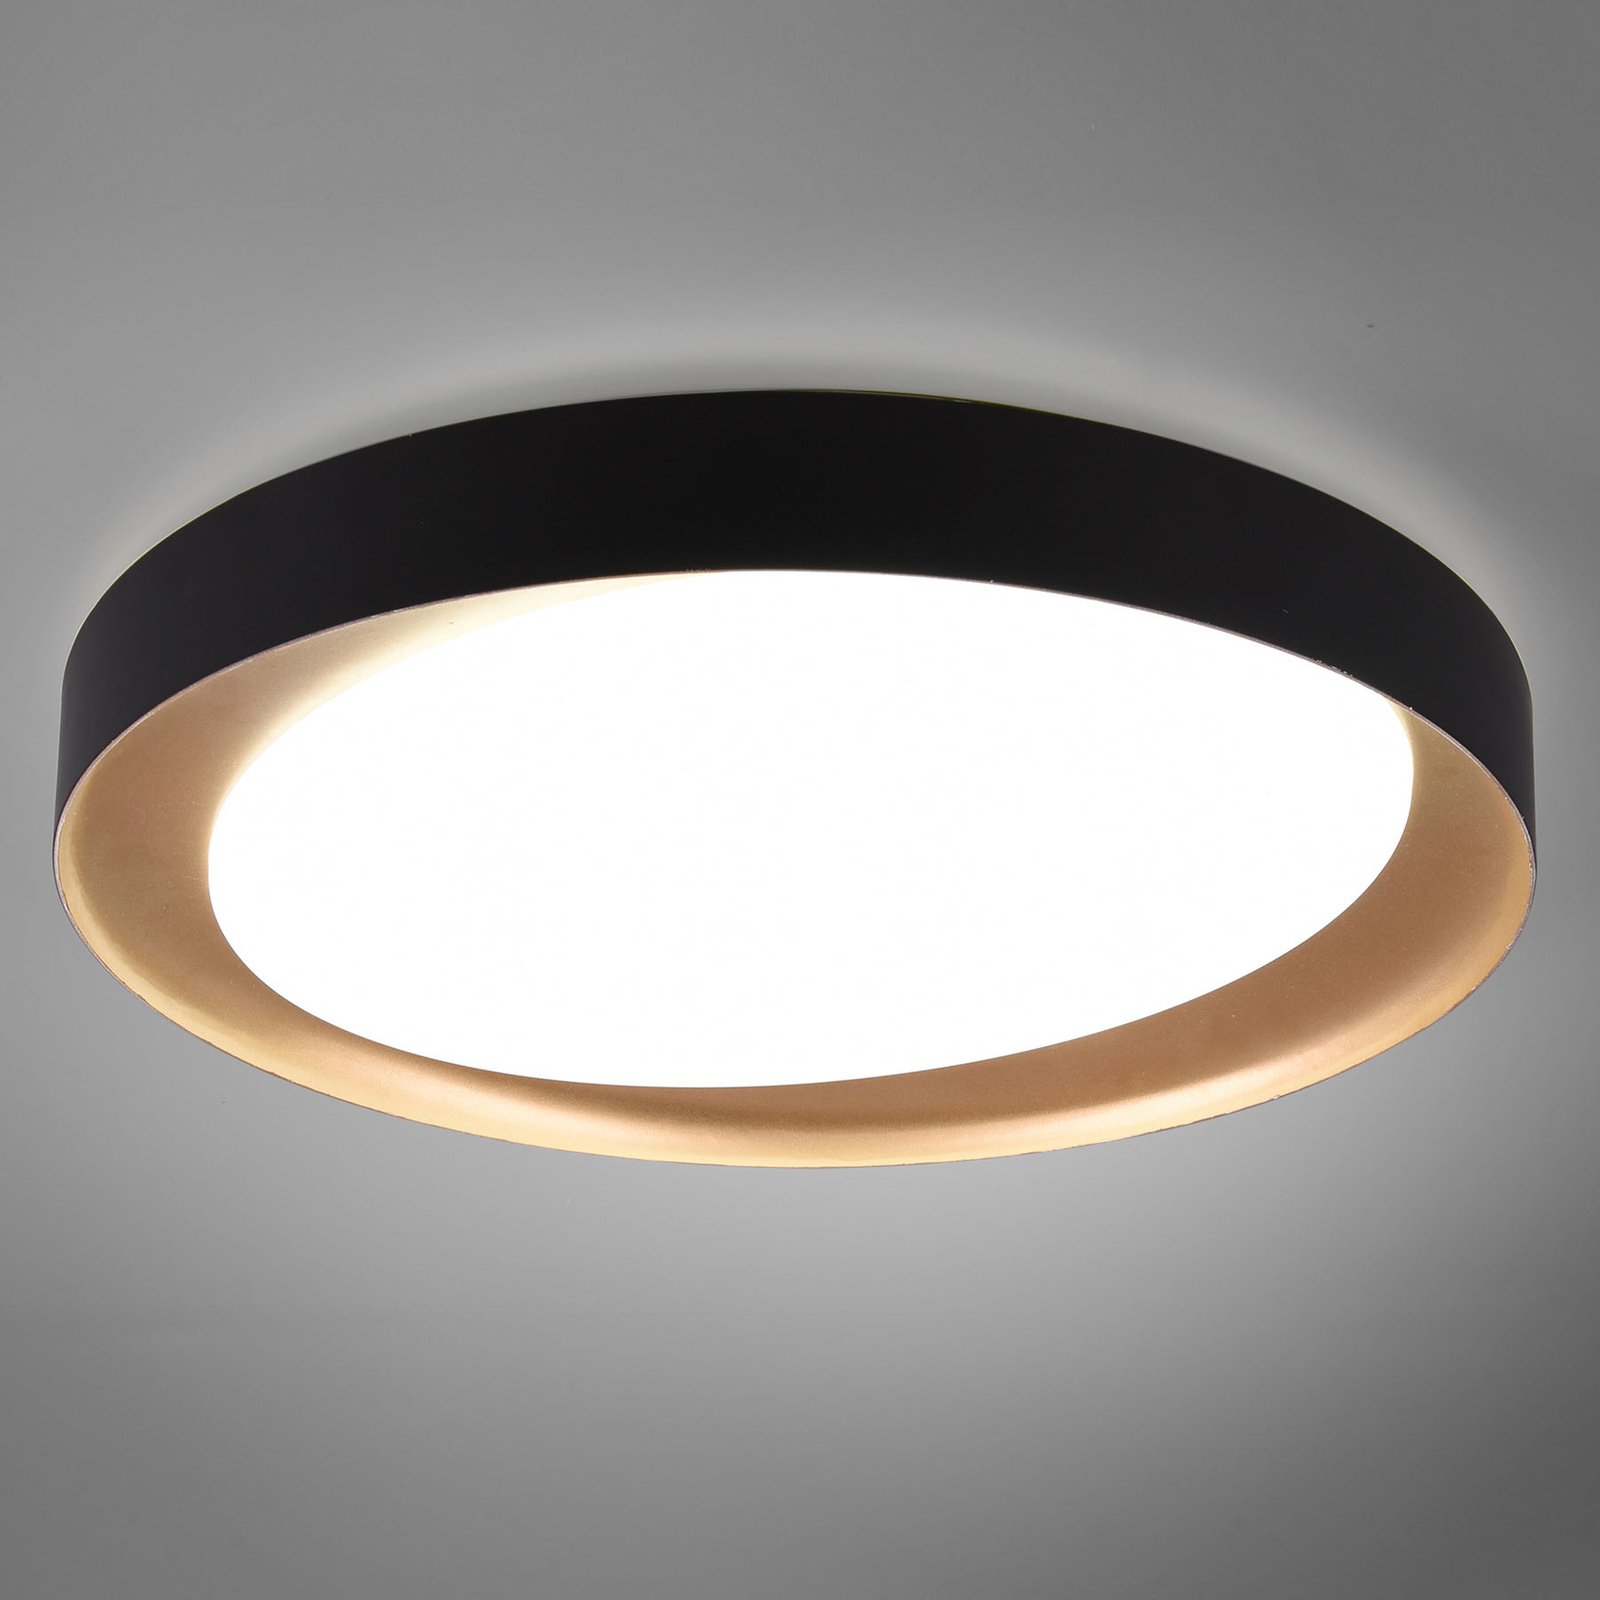 LED plafondlamp Zeta tunable white, zwart/goud